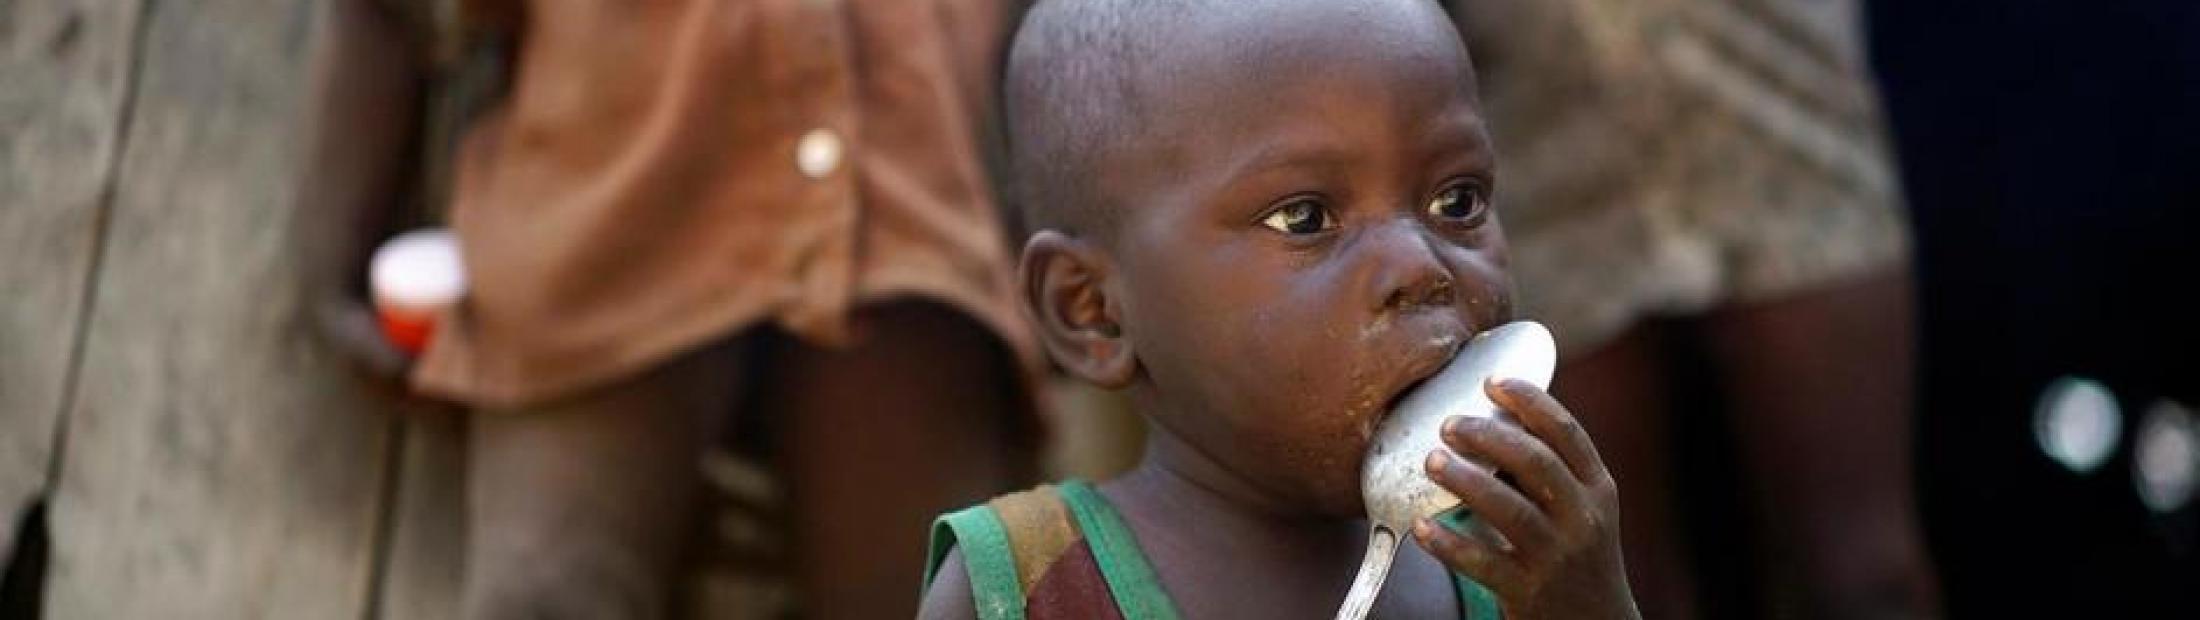 Cómo detectar a un niño desnutrido